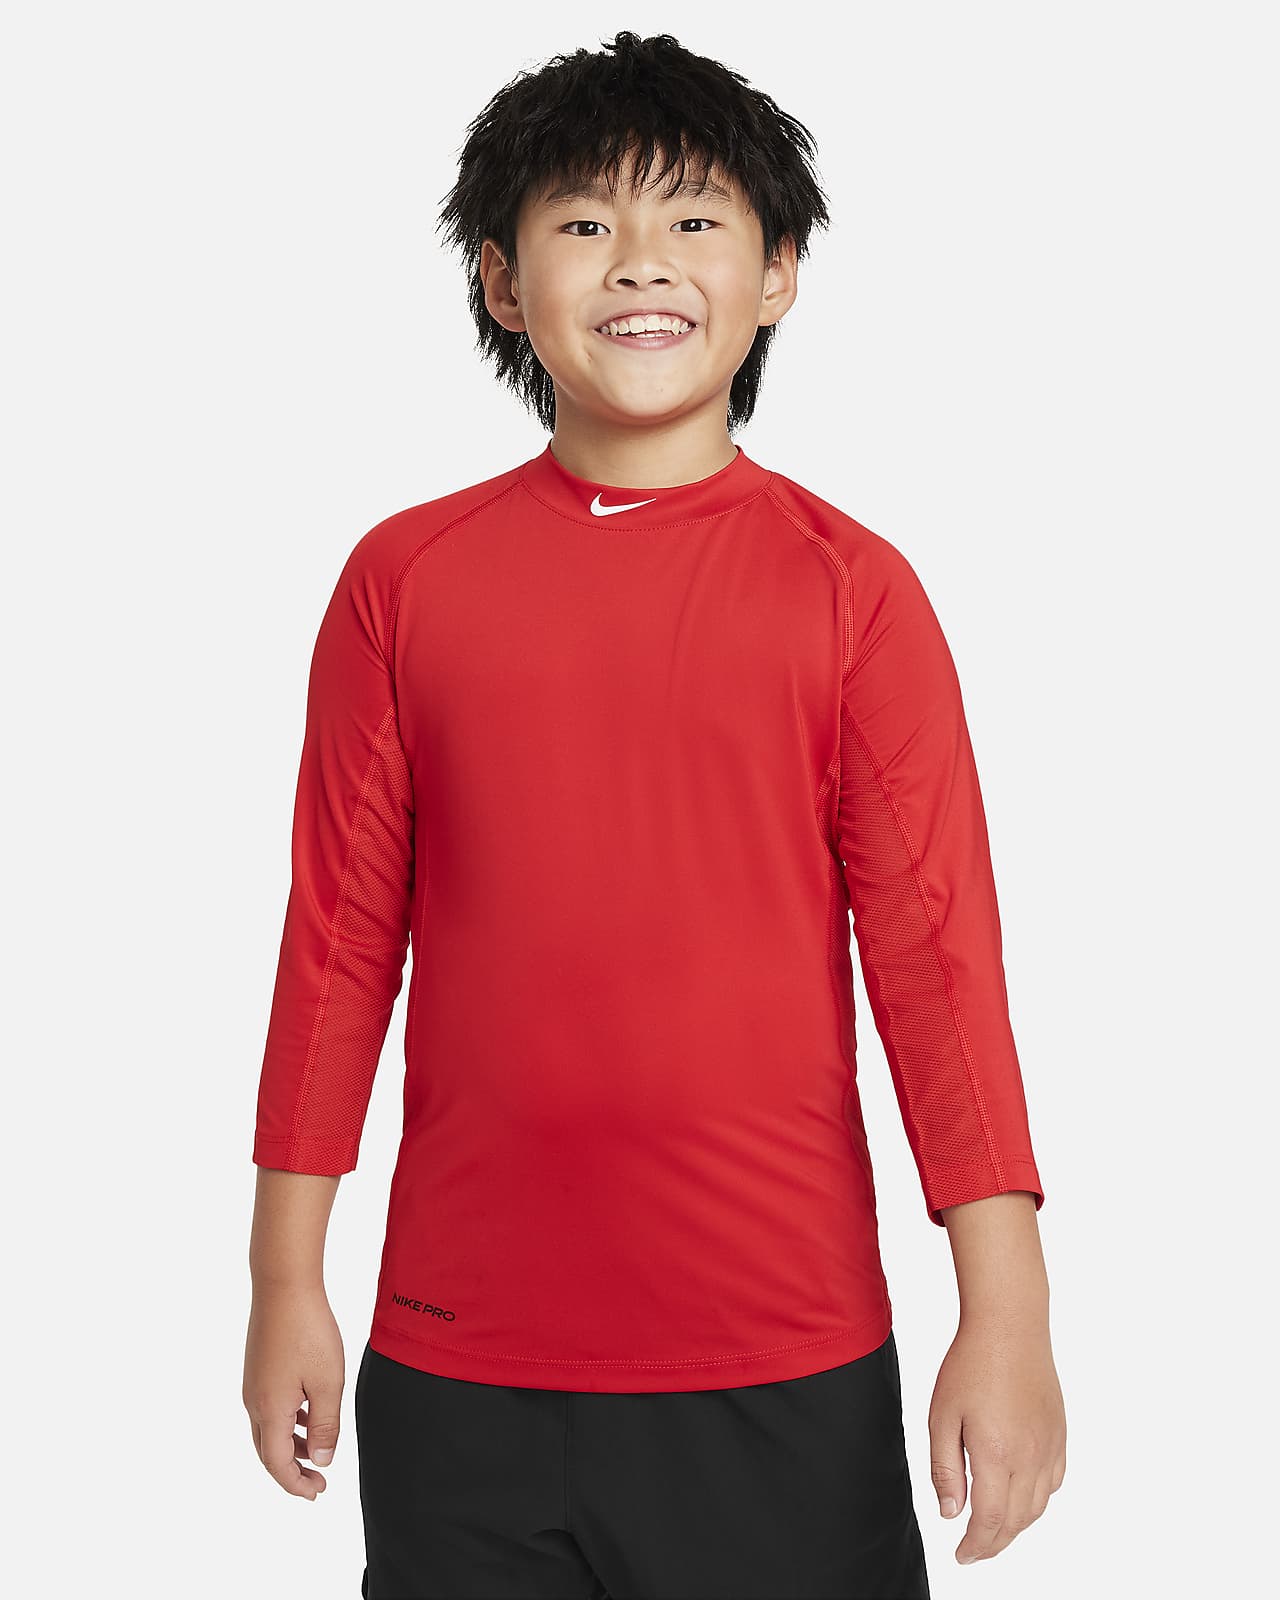 Nike Dry Big Kids' (Boys') 3/4-Sleeve Baseball Top